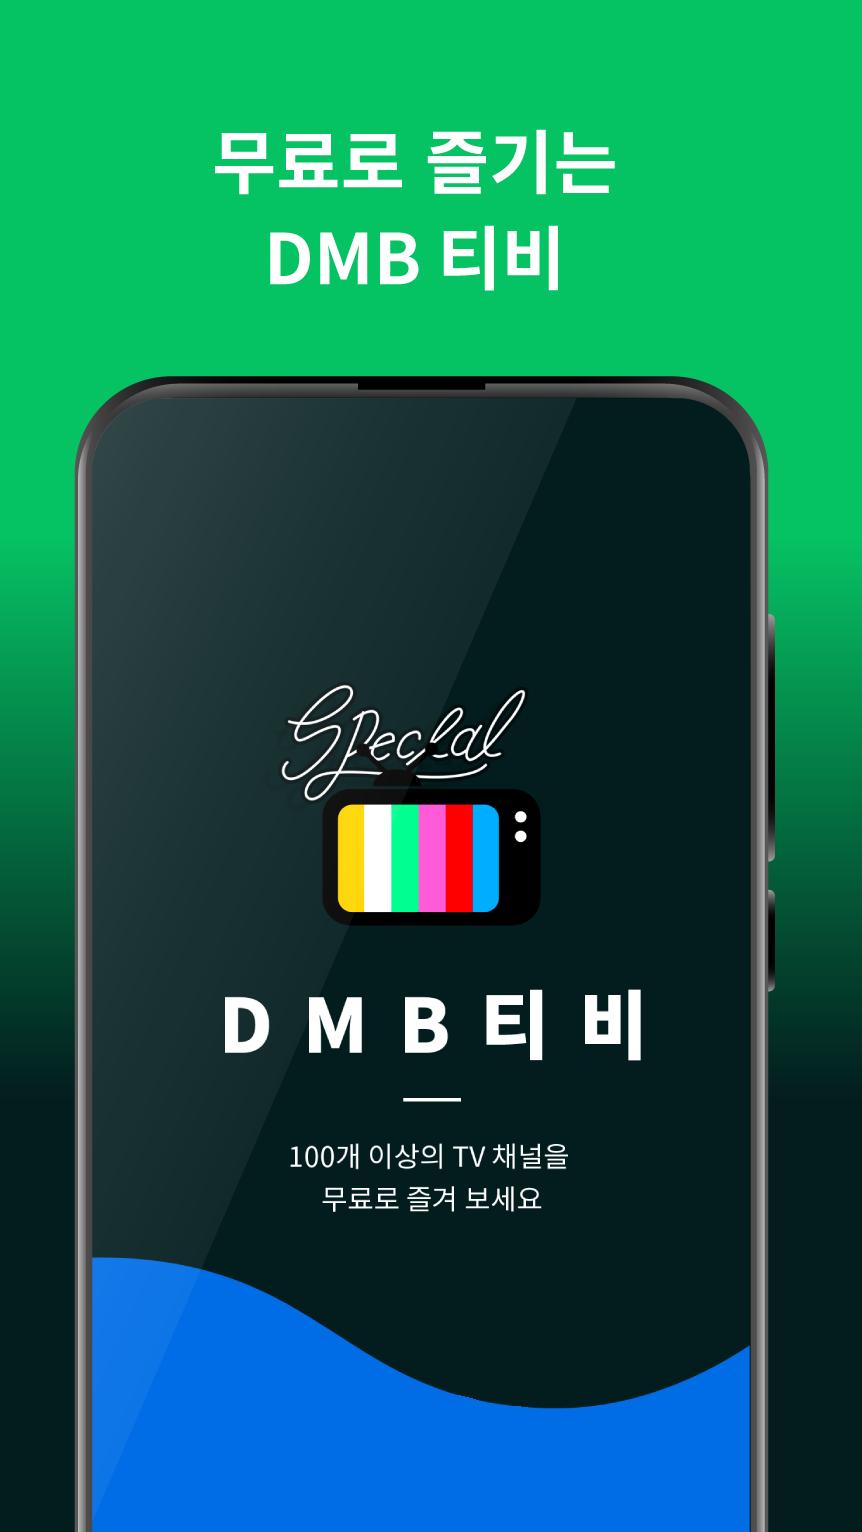 DMB TV 실시간무료TV, 실시간TV 방송, 지상파, 디엠비 방송시청, 모바일 무료티비 1.0.1 Screenshot 6